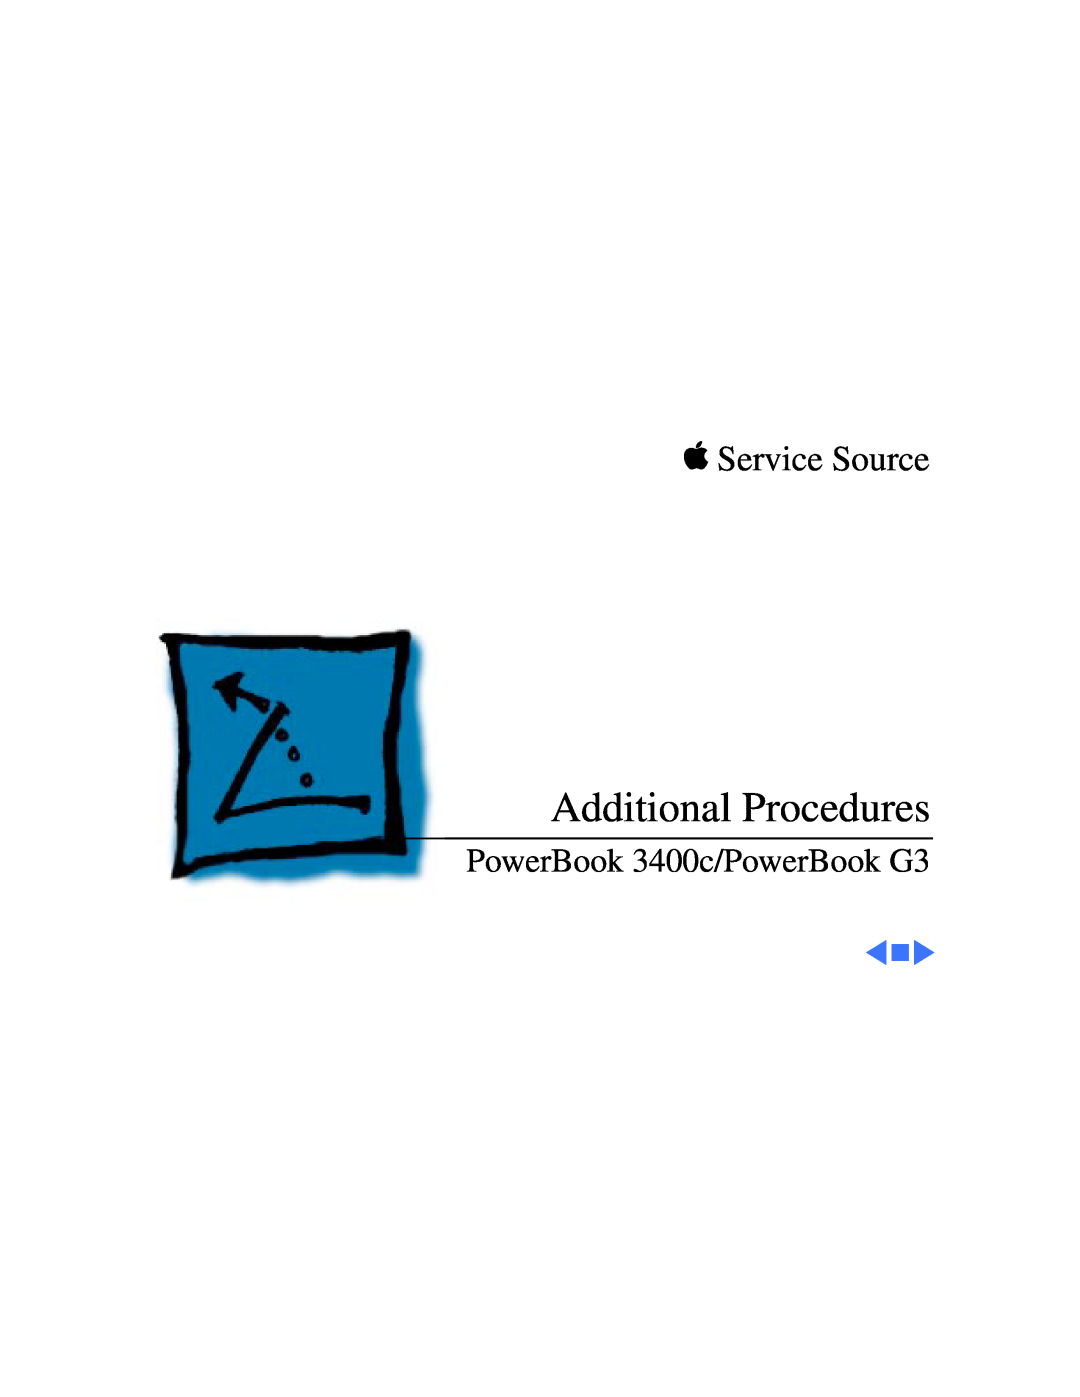 Apple 3400C/200 manual Additional Procedures, K Service Source, PowerBook 3400c/PowerBook G3 